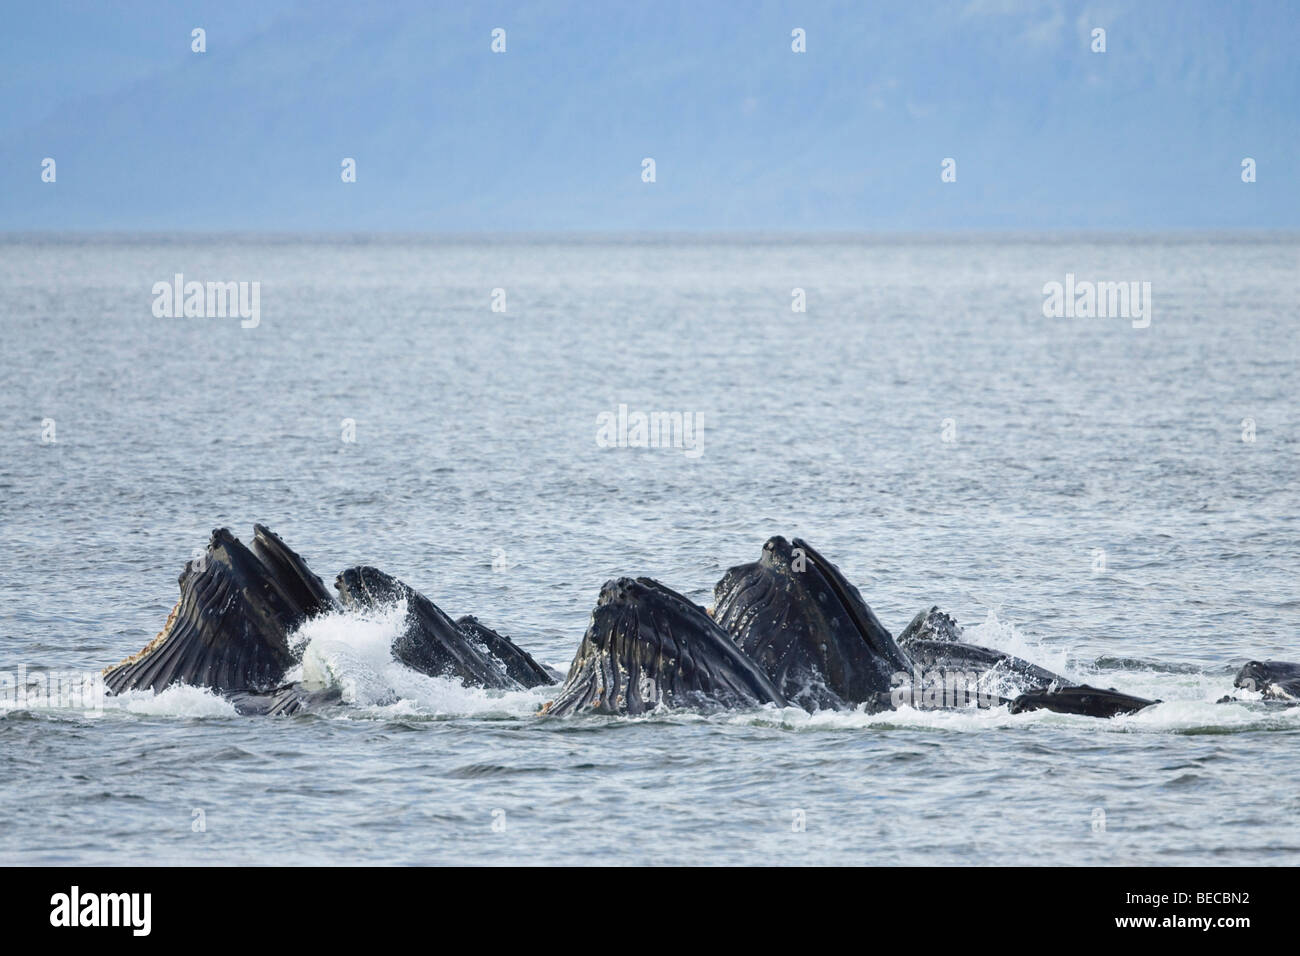 Humpack Wale bubble Net füttern, (Impressionen Novaeanglia), Bartenwale, Inside Passage, Alaska, USA Stockfoto